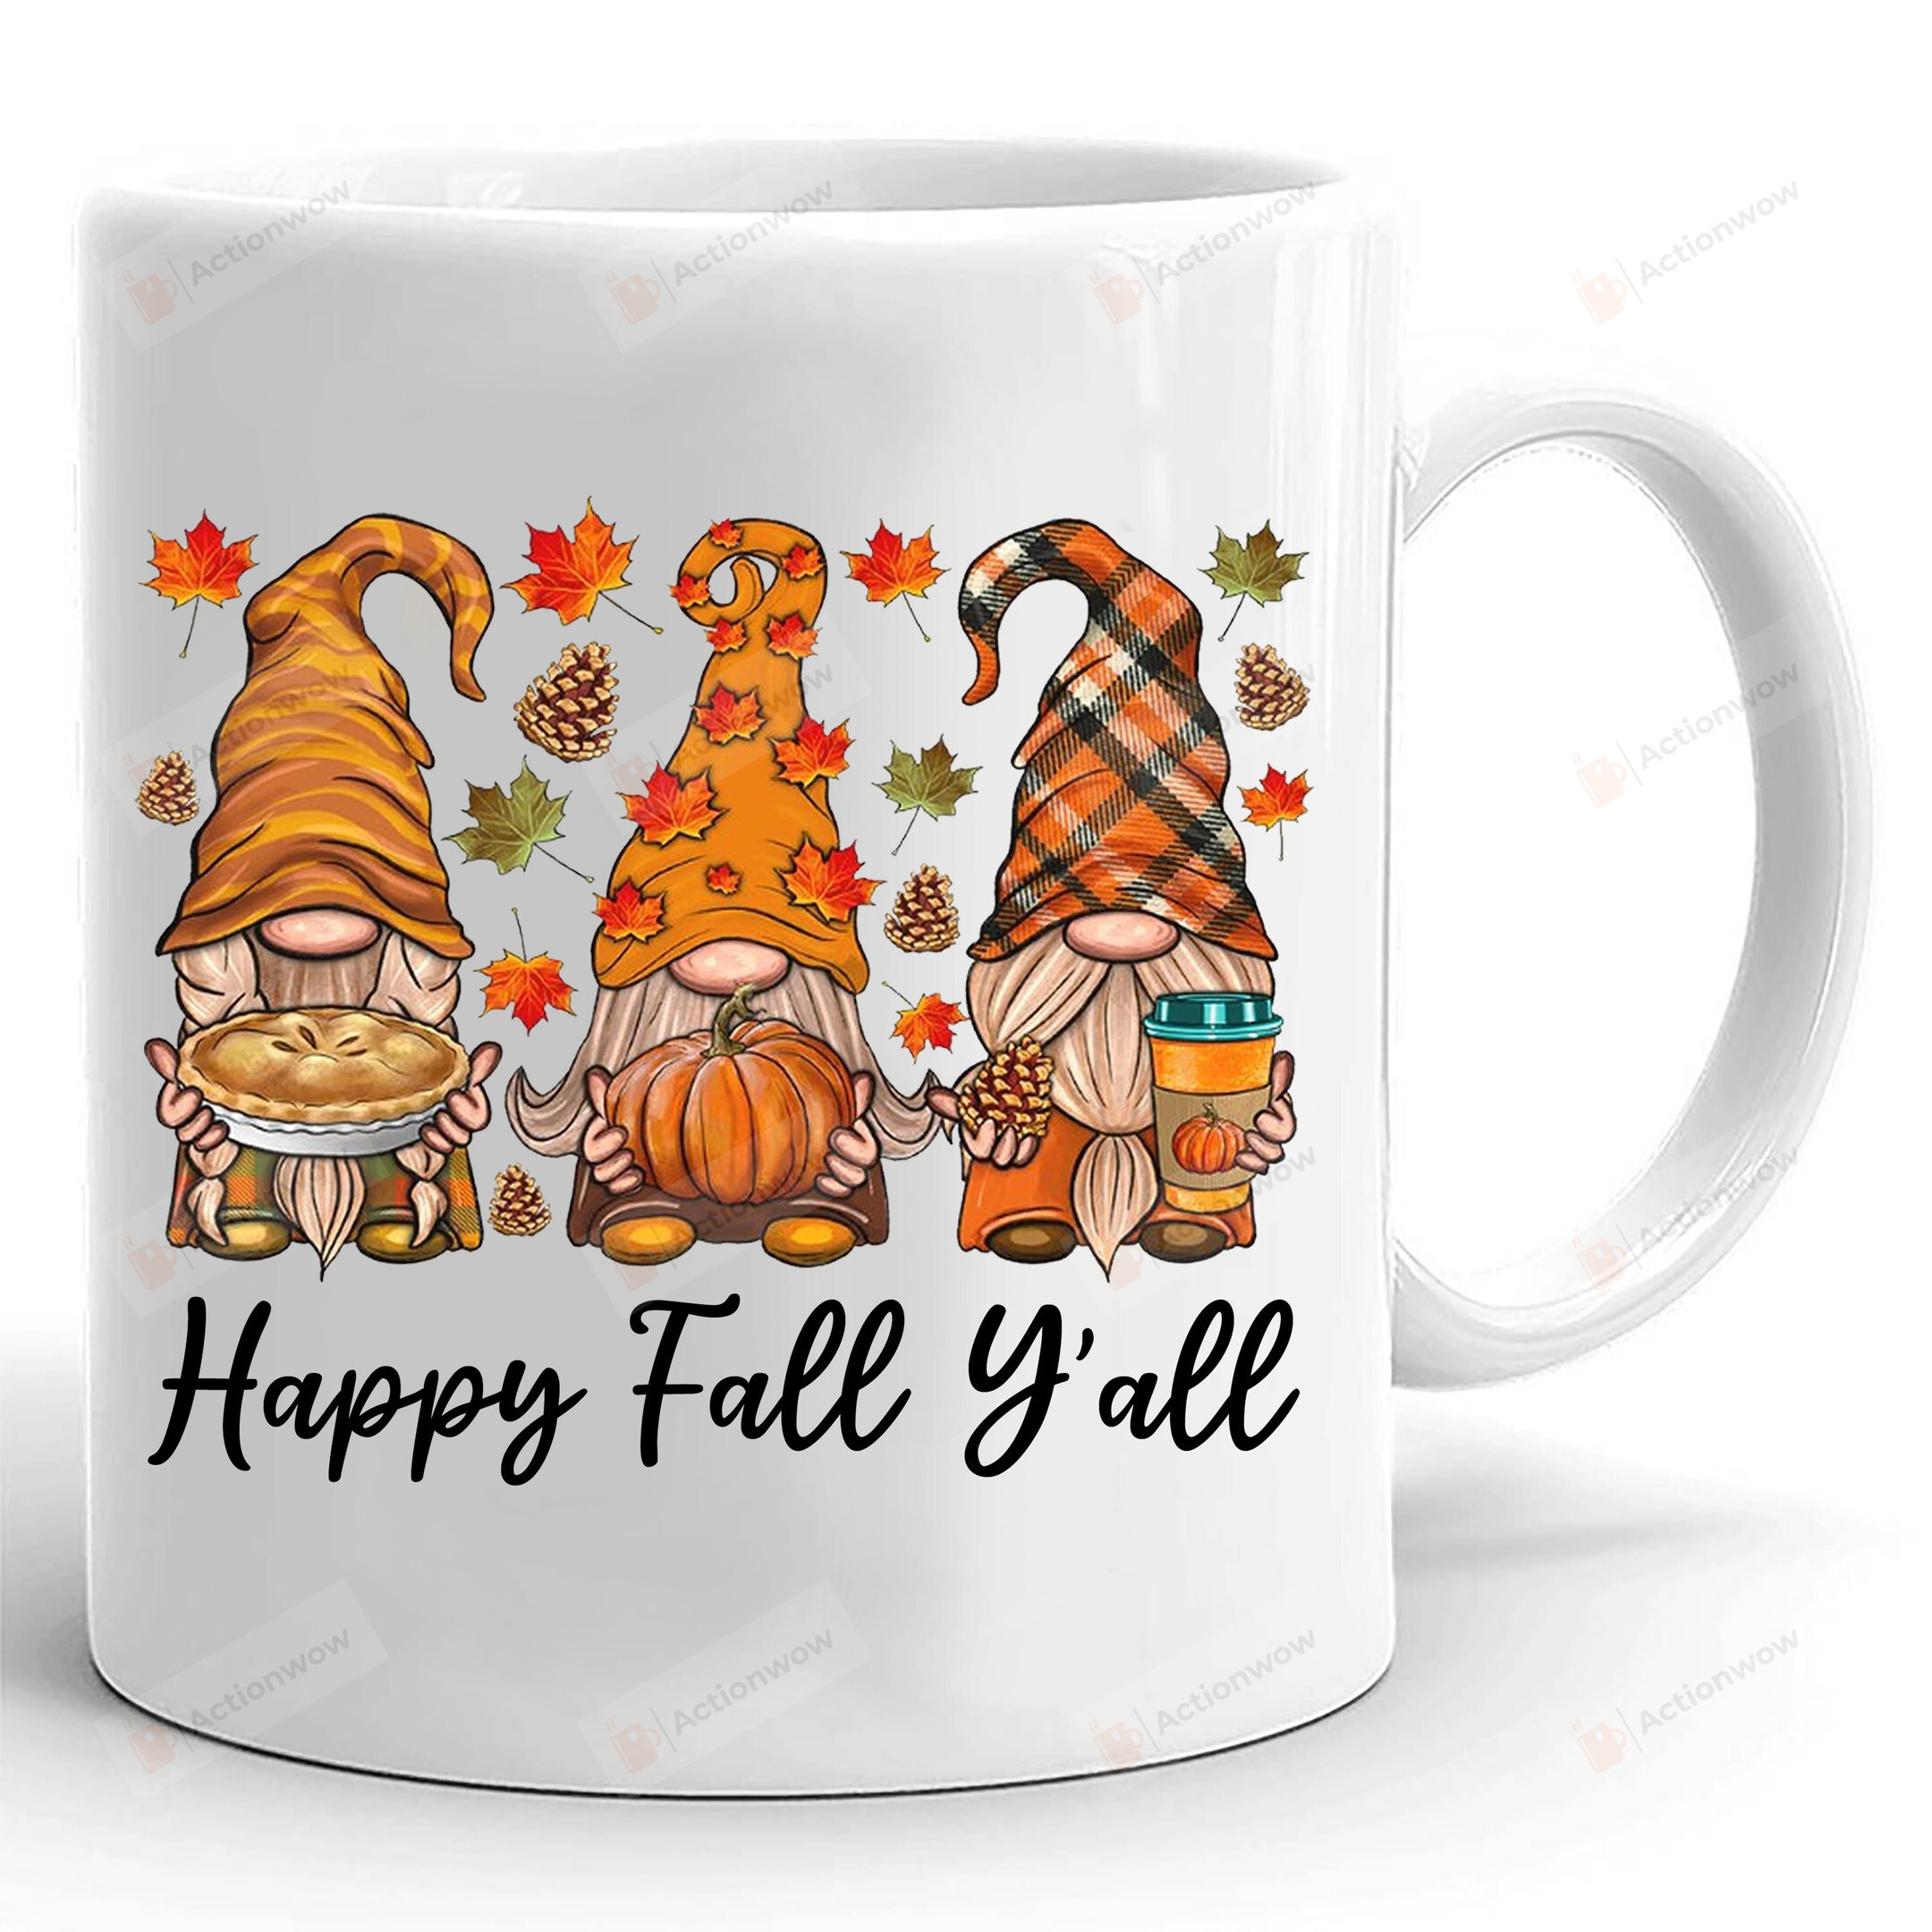 Happy Fall Y'all Thanksgiving Gnome Mug, Its Fall Yall Mug Fall Things For Women, Gromes Thanksgiving Sweaters Mug Gifts For Women Men